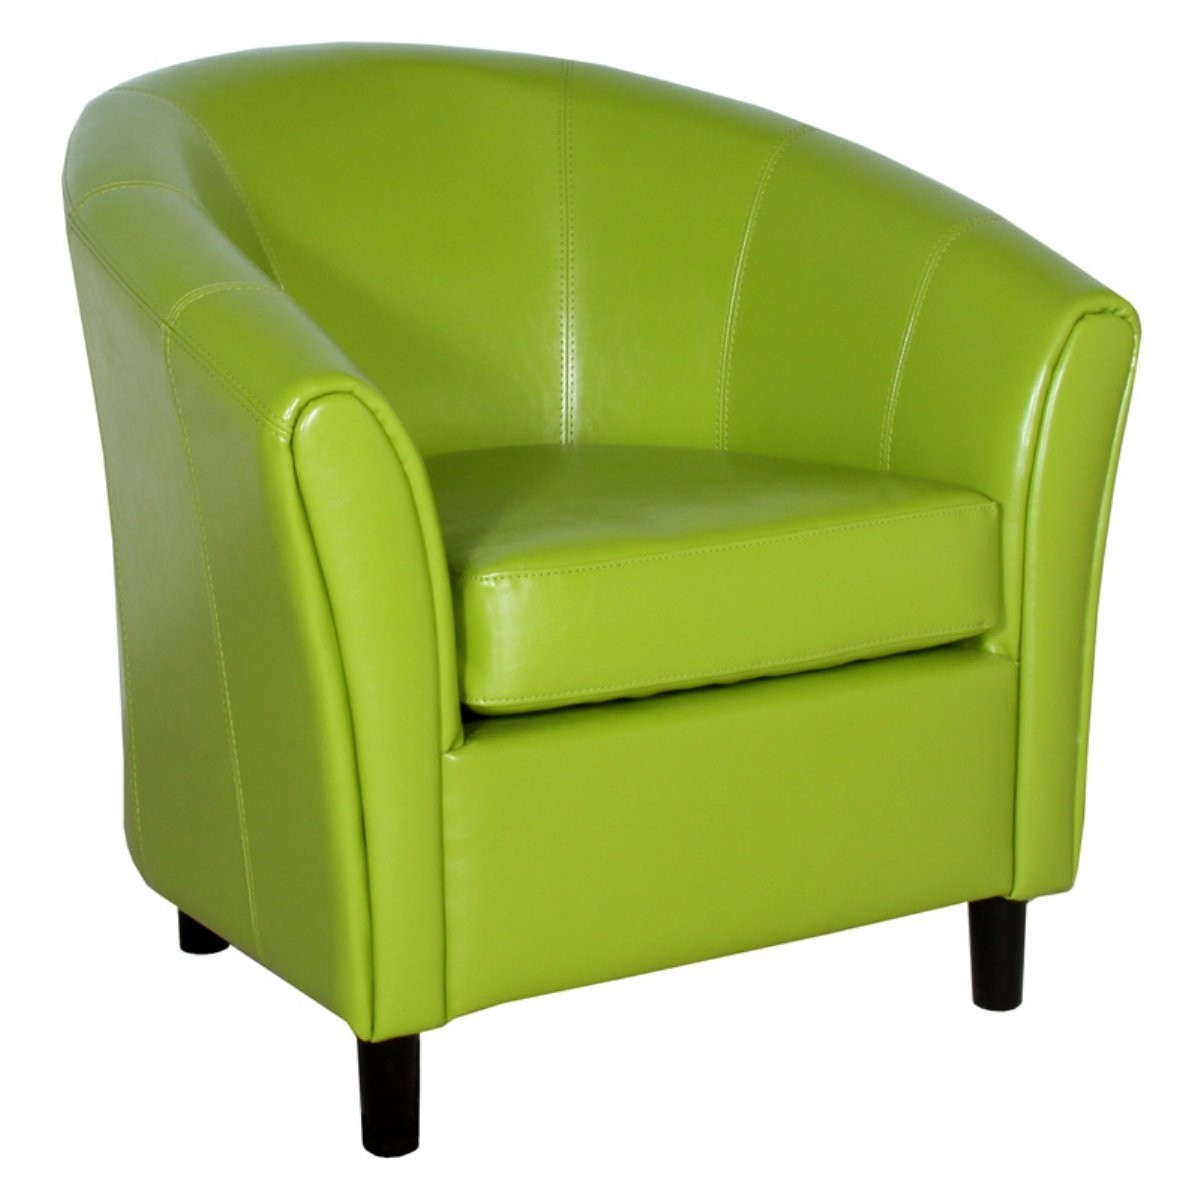 Barrel chair bright green36077 brightgreen home